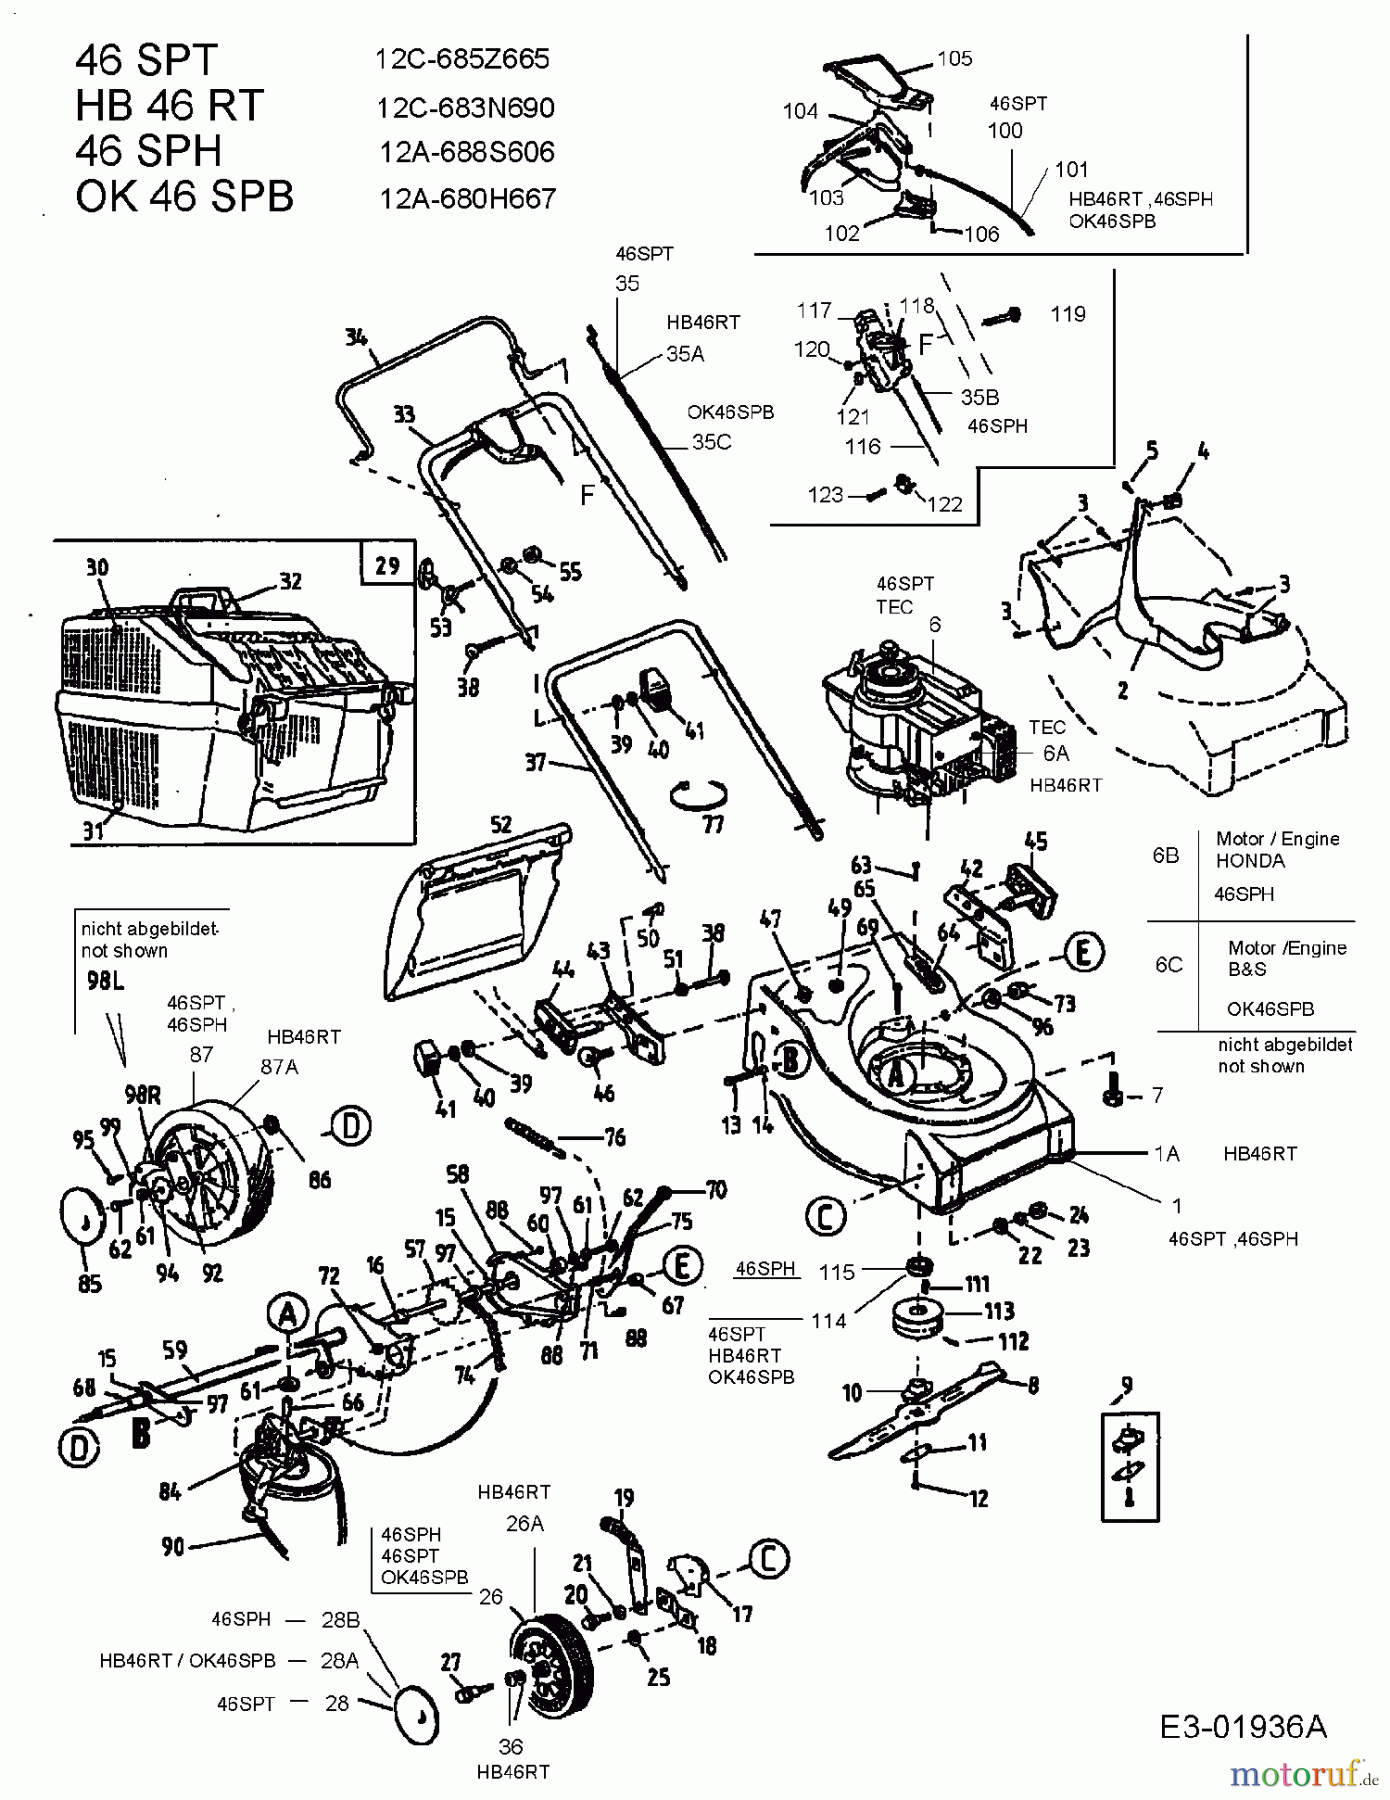  Ok Petrol mower self propelled 46 SPB 12A-680H667  (2004) Basic machine